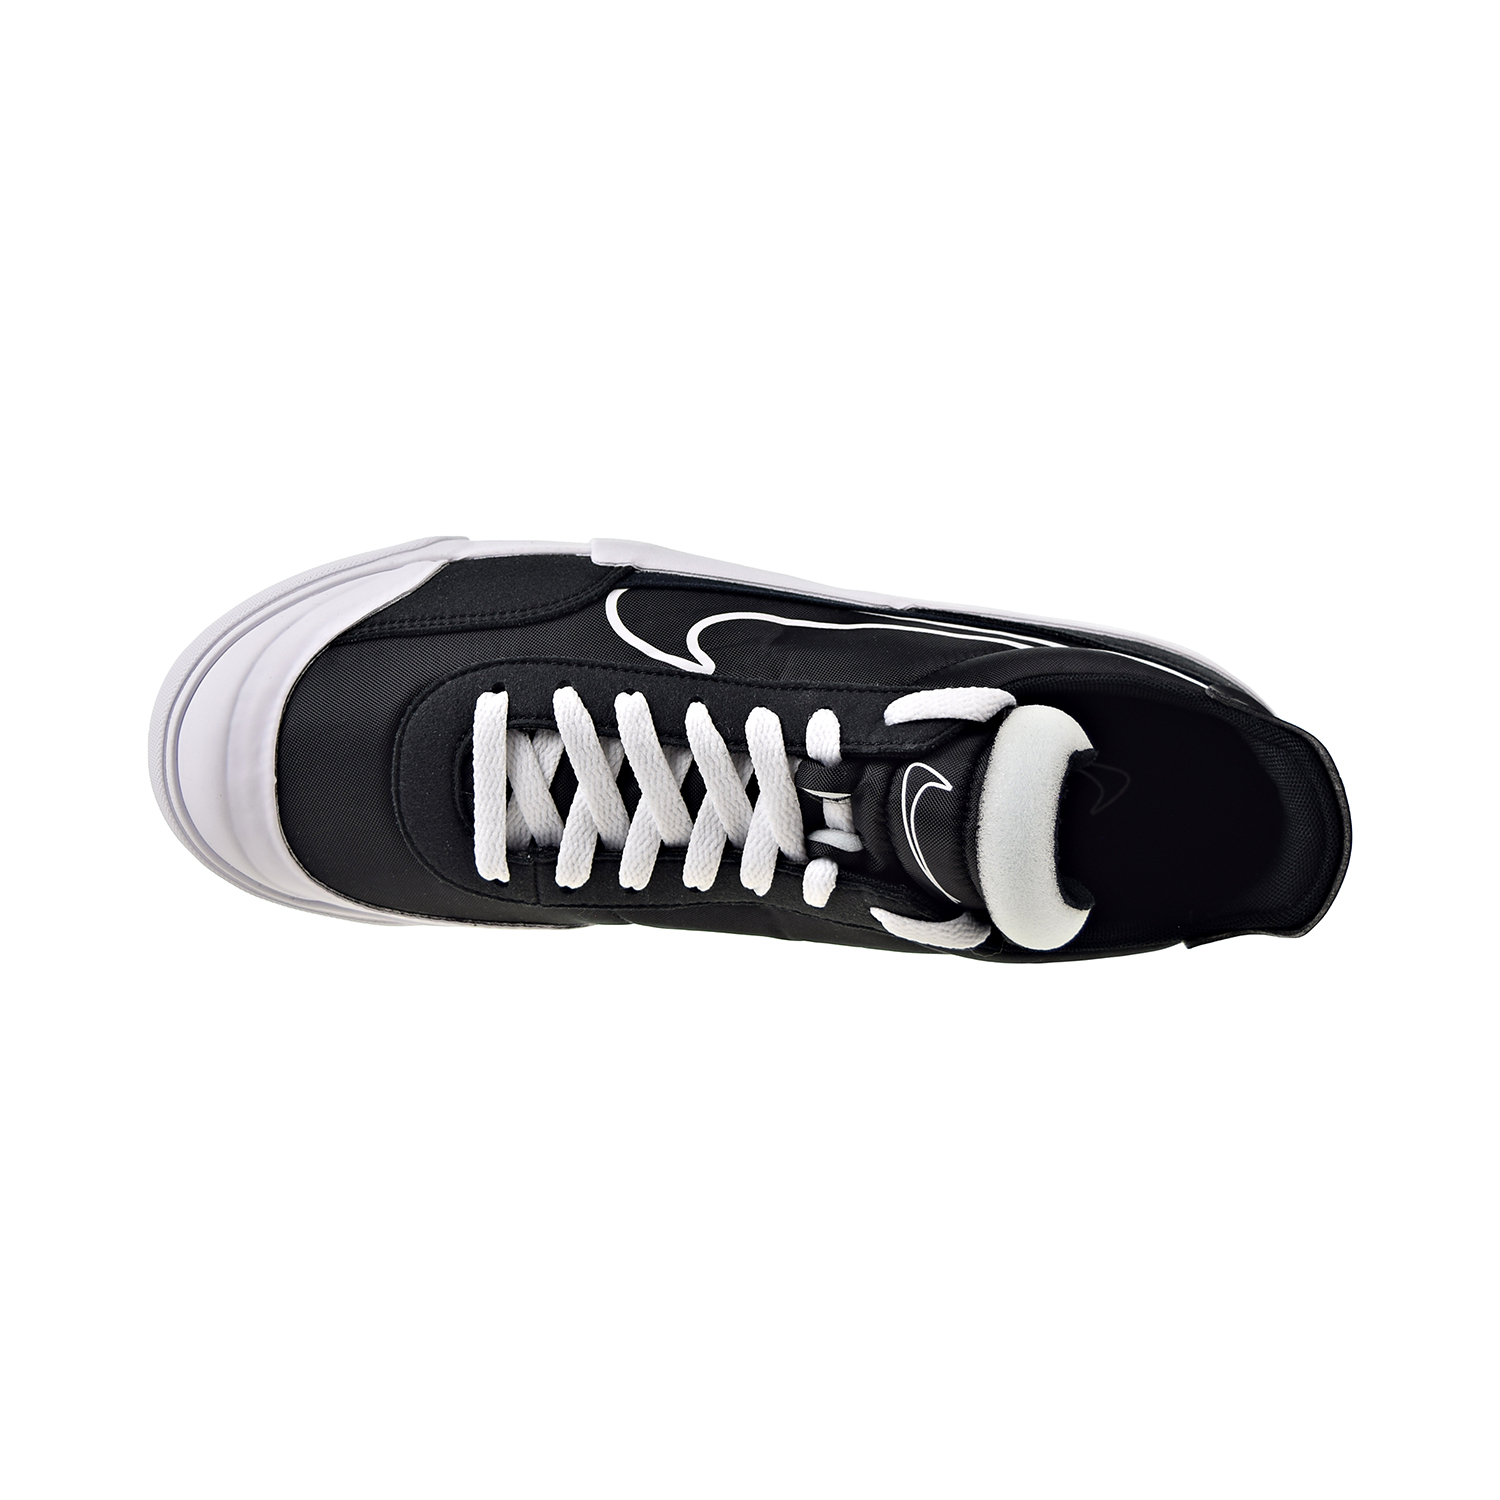 Nike Drop-Type Hybrid Men's Shoes Black-White cq0989-002 - image 5 of 6